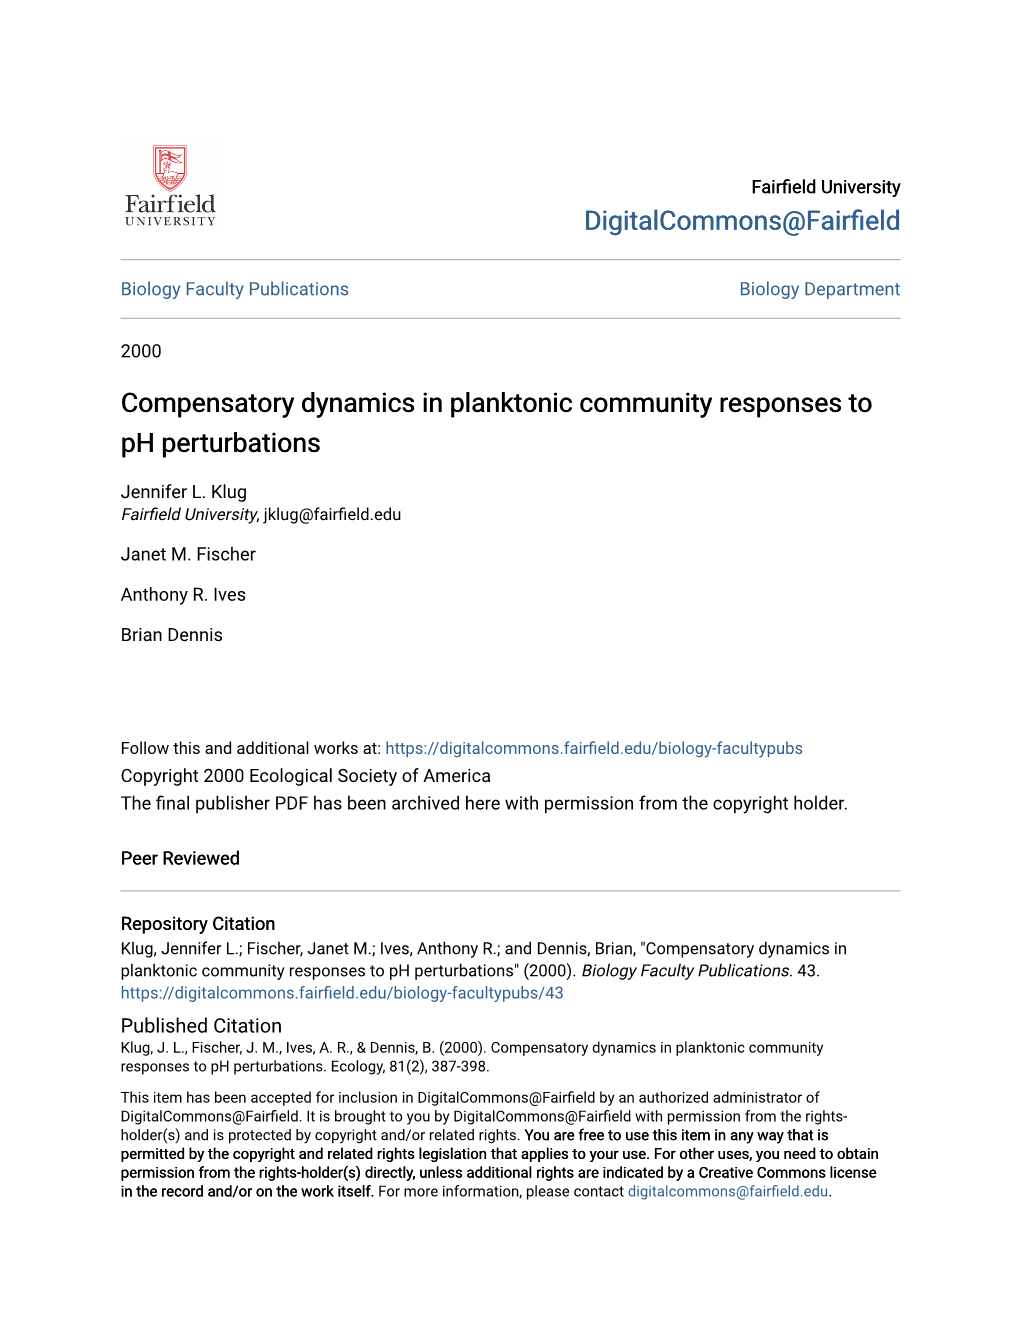 Compensatory Dynamics in Planktonic Community Responses to Ph Perturbations